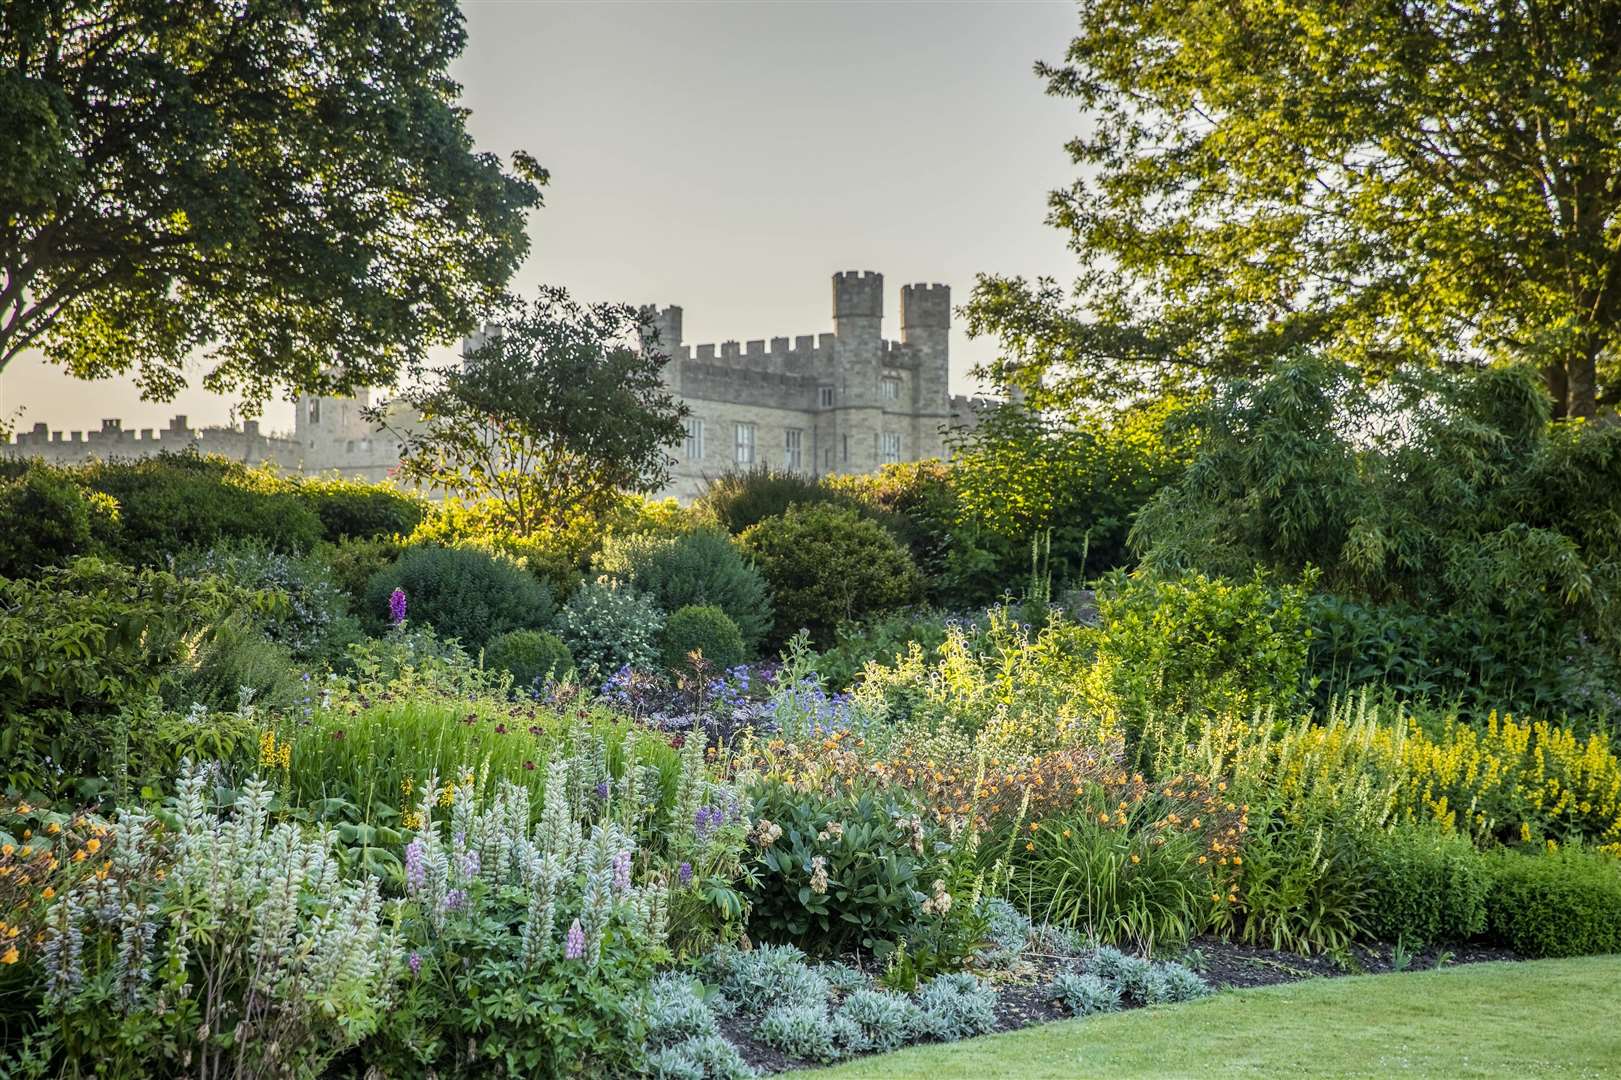 Leeds Castle gardens Picture: Thomas Alexander